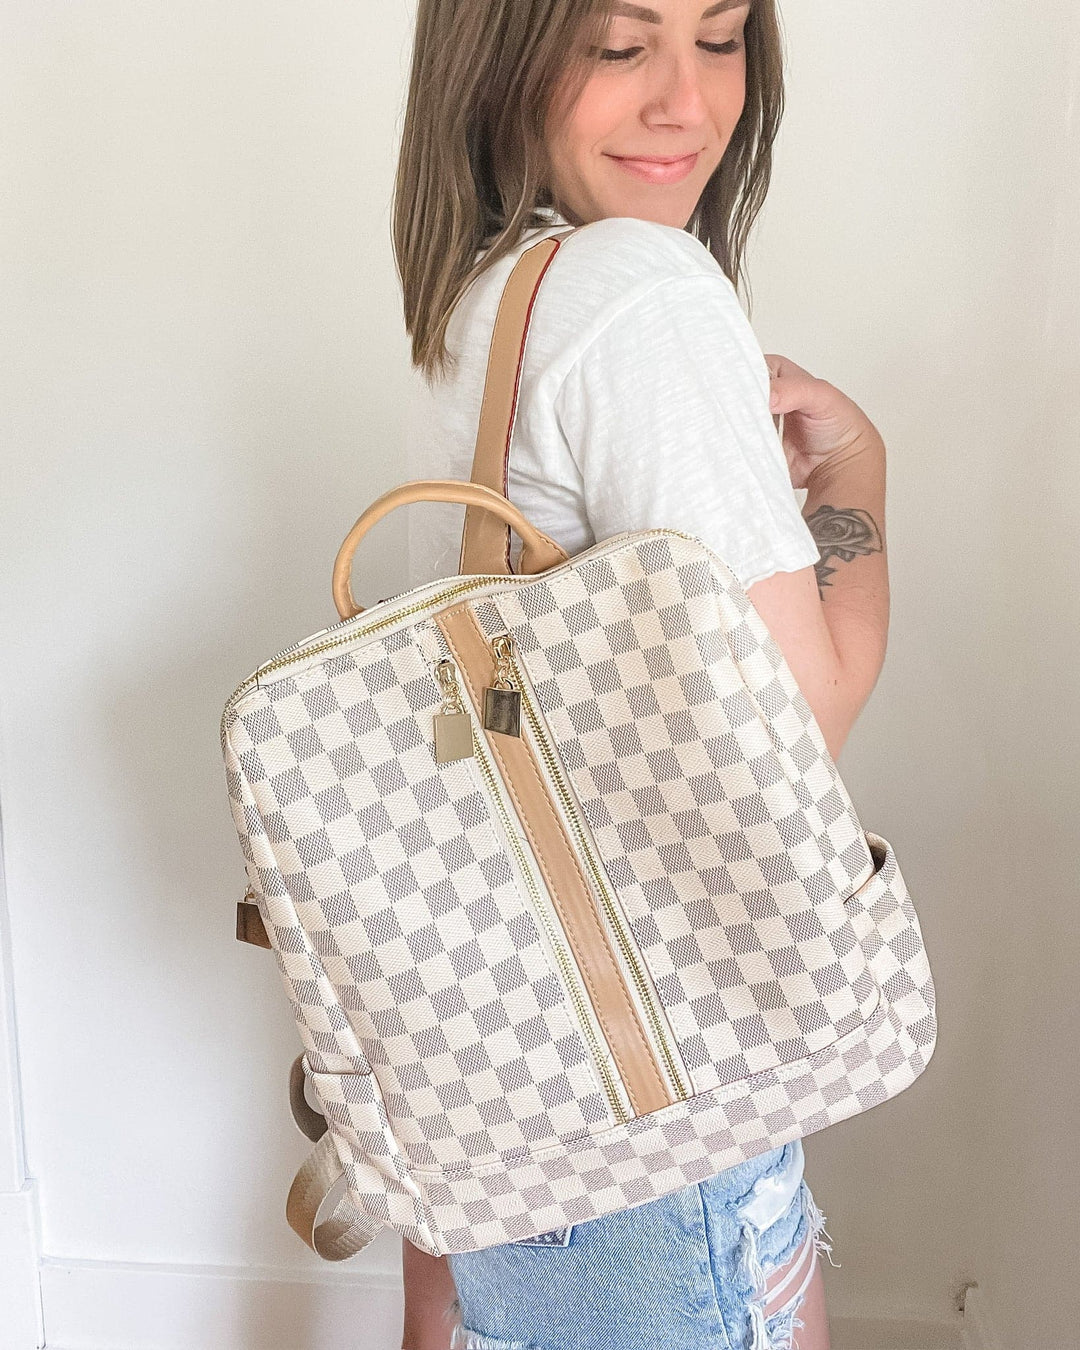 Louis Vuitton Backpack White Checker